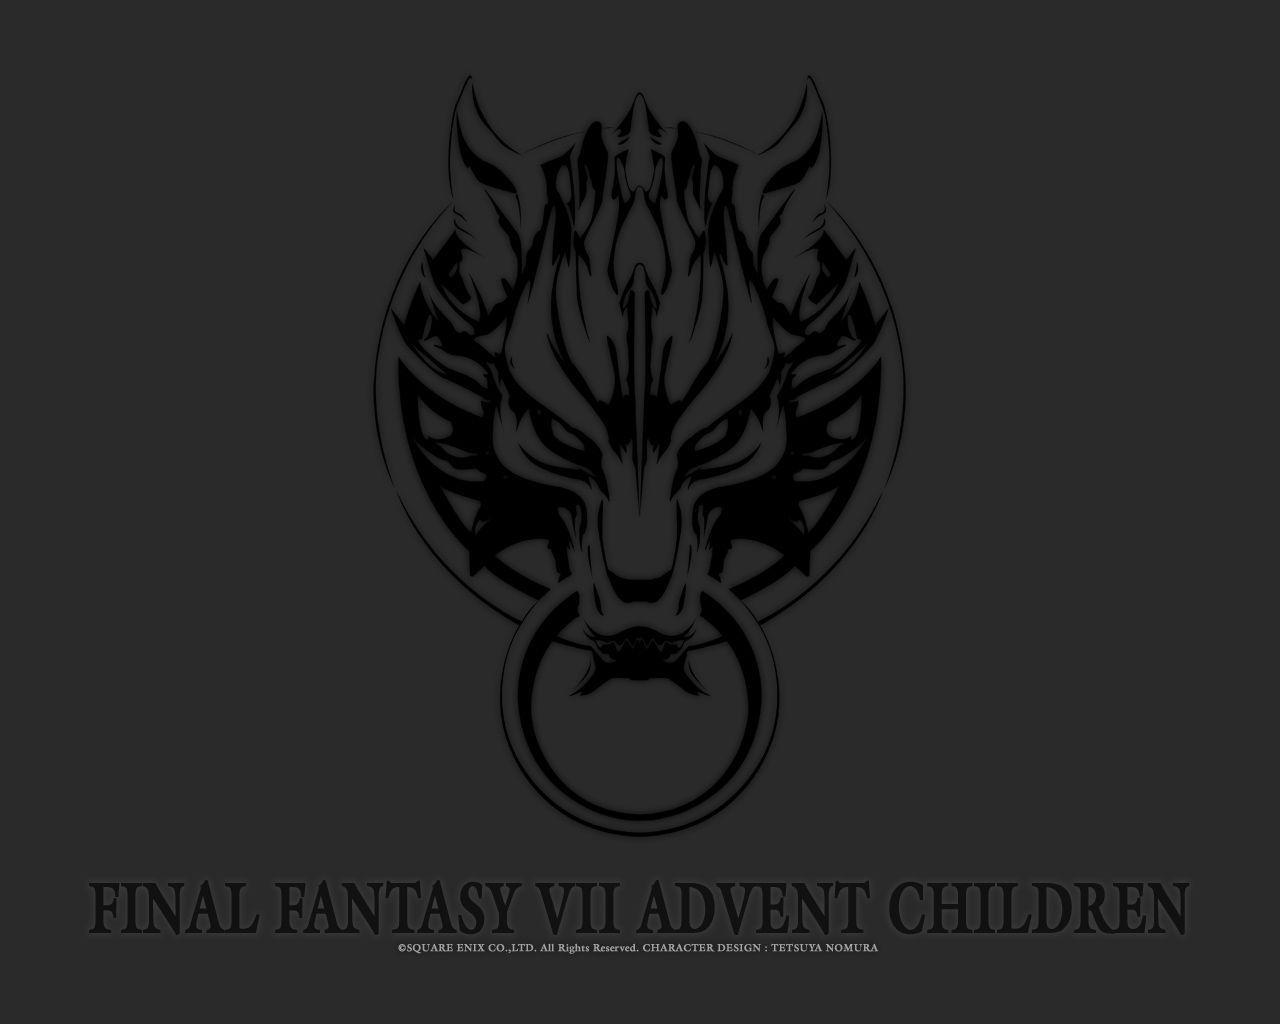 Final Fantasy 7 VII Advent Children Official Wallpaper